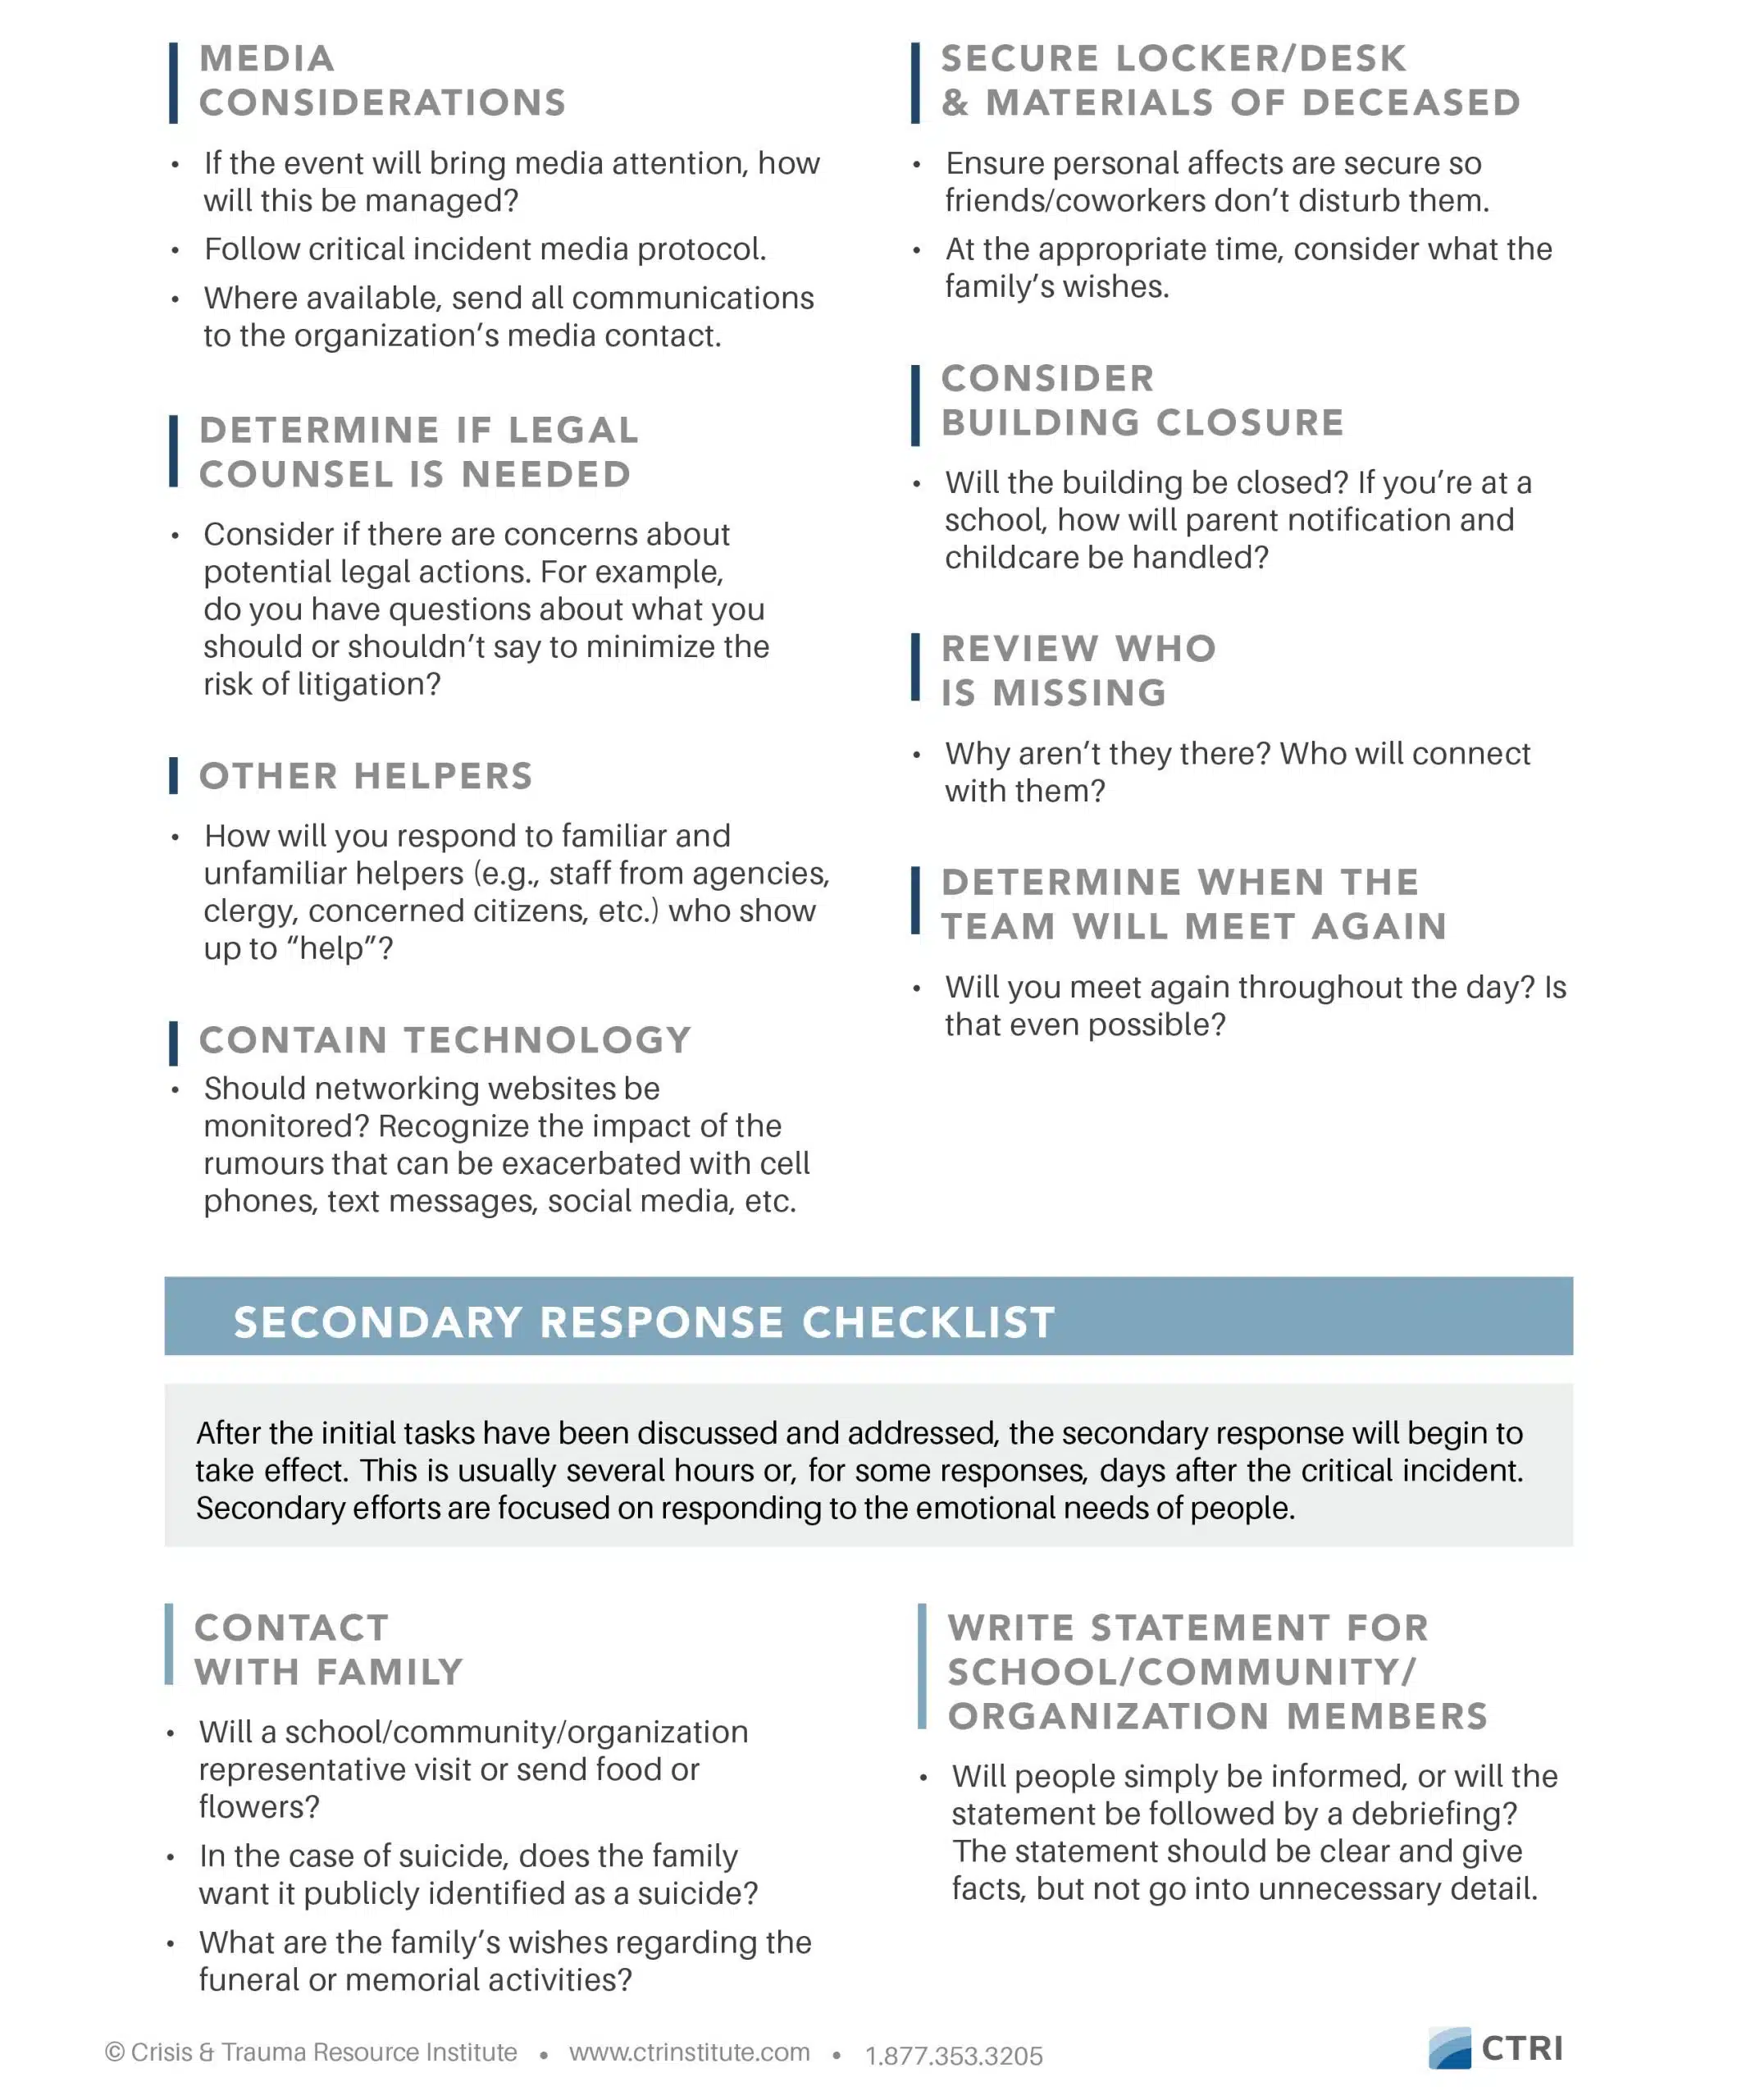 Crisis Response Checklist Printable handout page 2 image